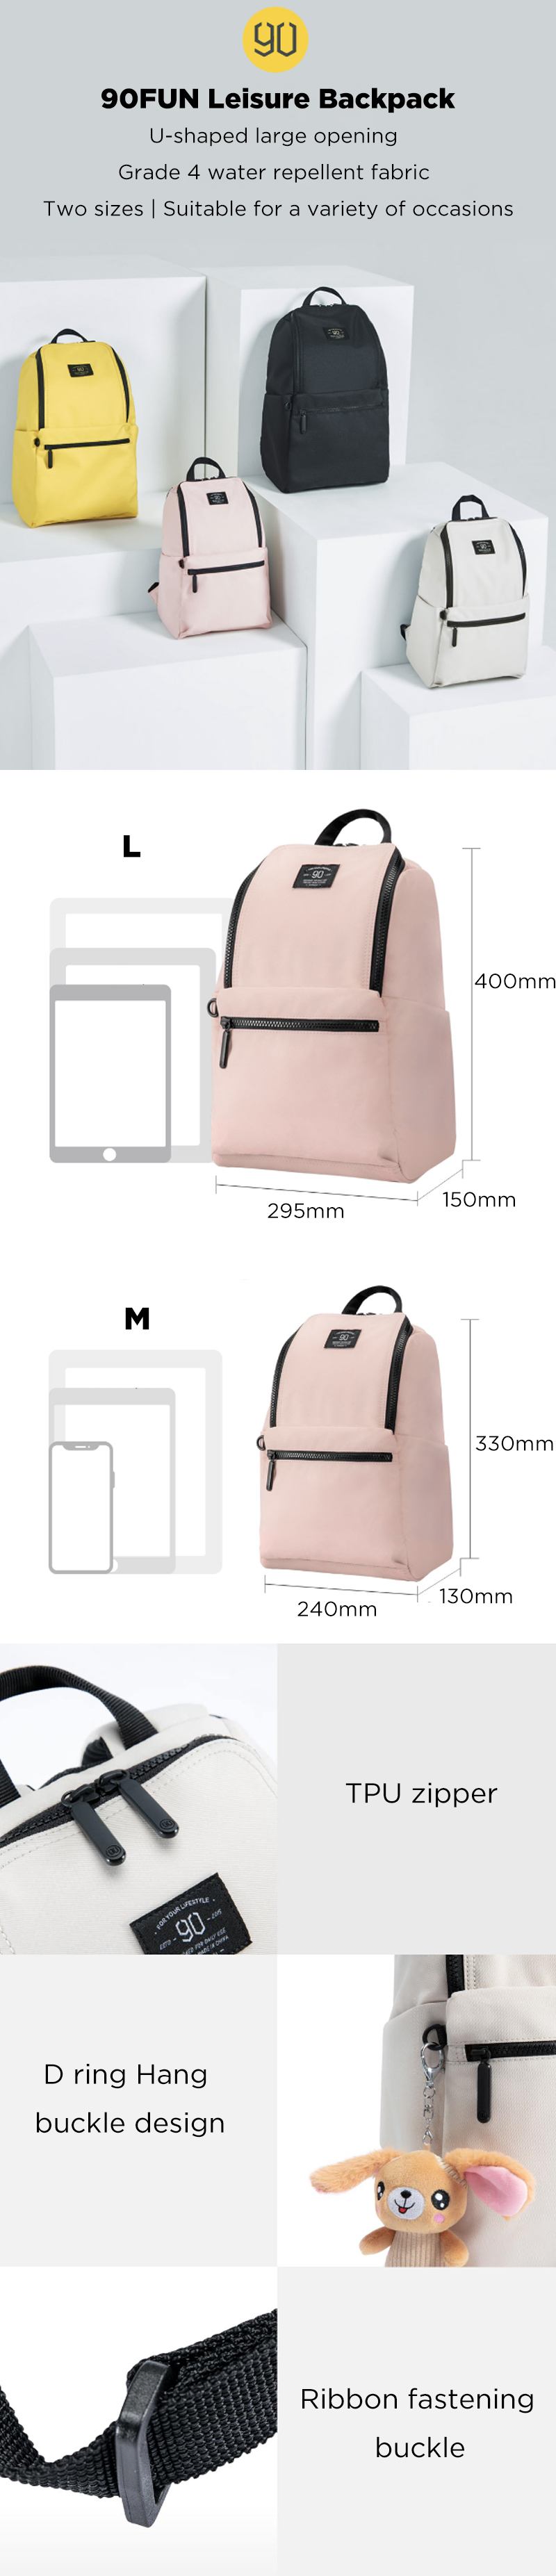 90FUN-10L-18L-Backpack-Level-4-Waterproof-156inch-Laptop-Shoulder-Bag-Outdoor-Travel-1537002-1